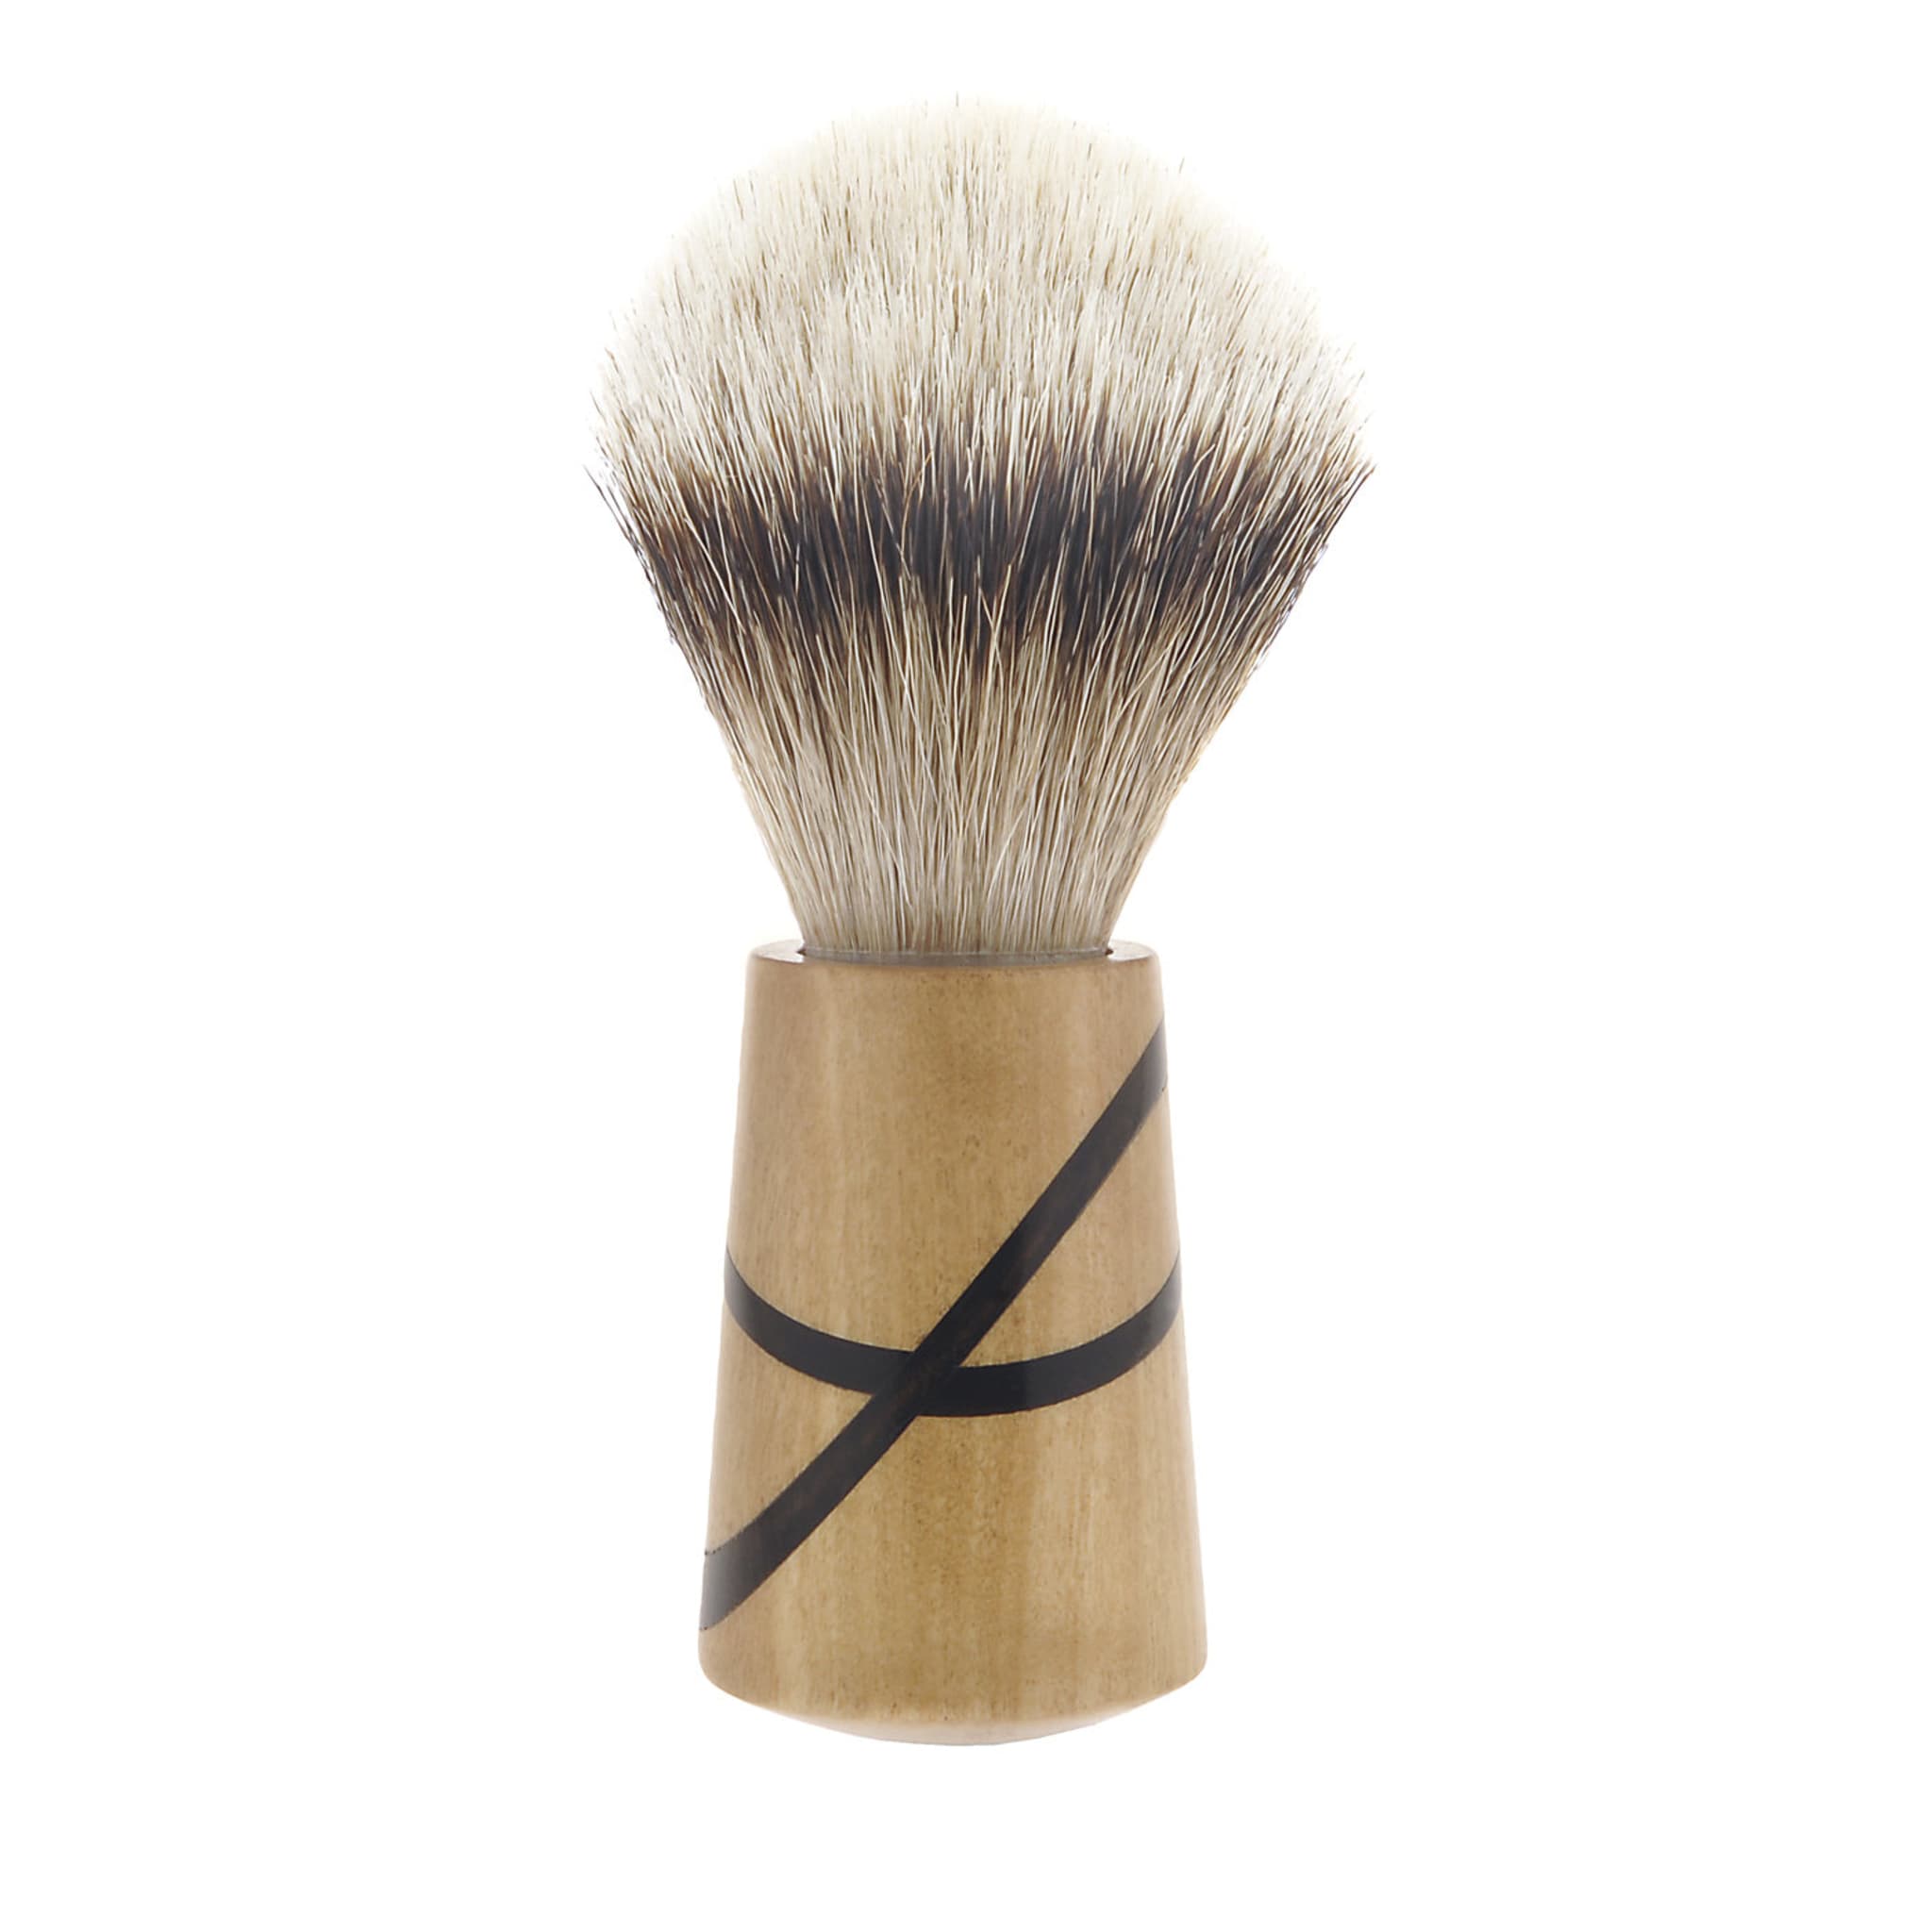 Shaving Brush in Maple and Ebony Wood - Main view